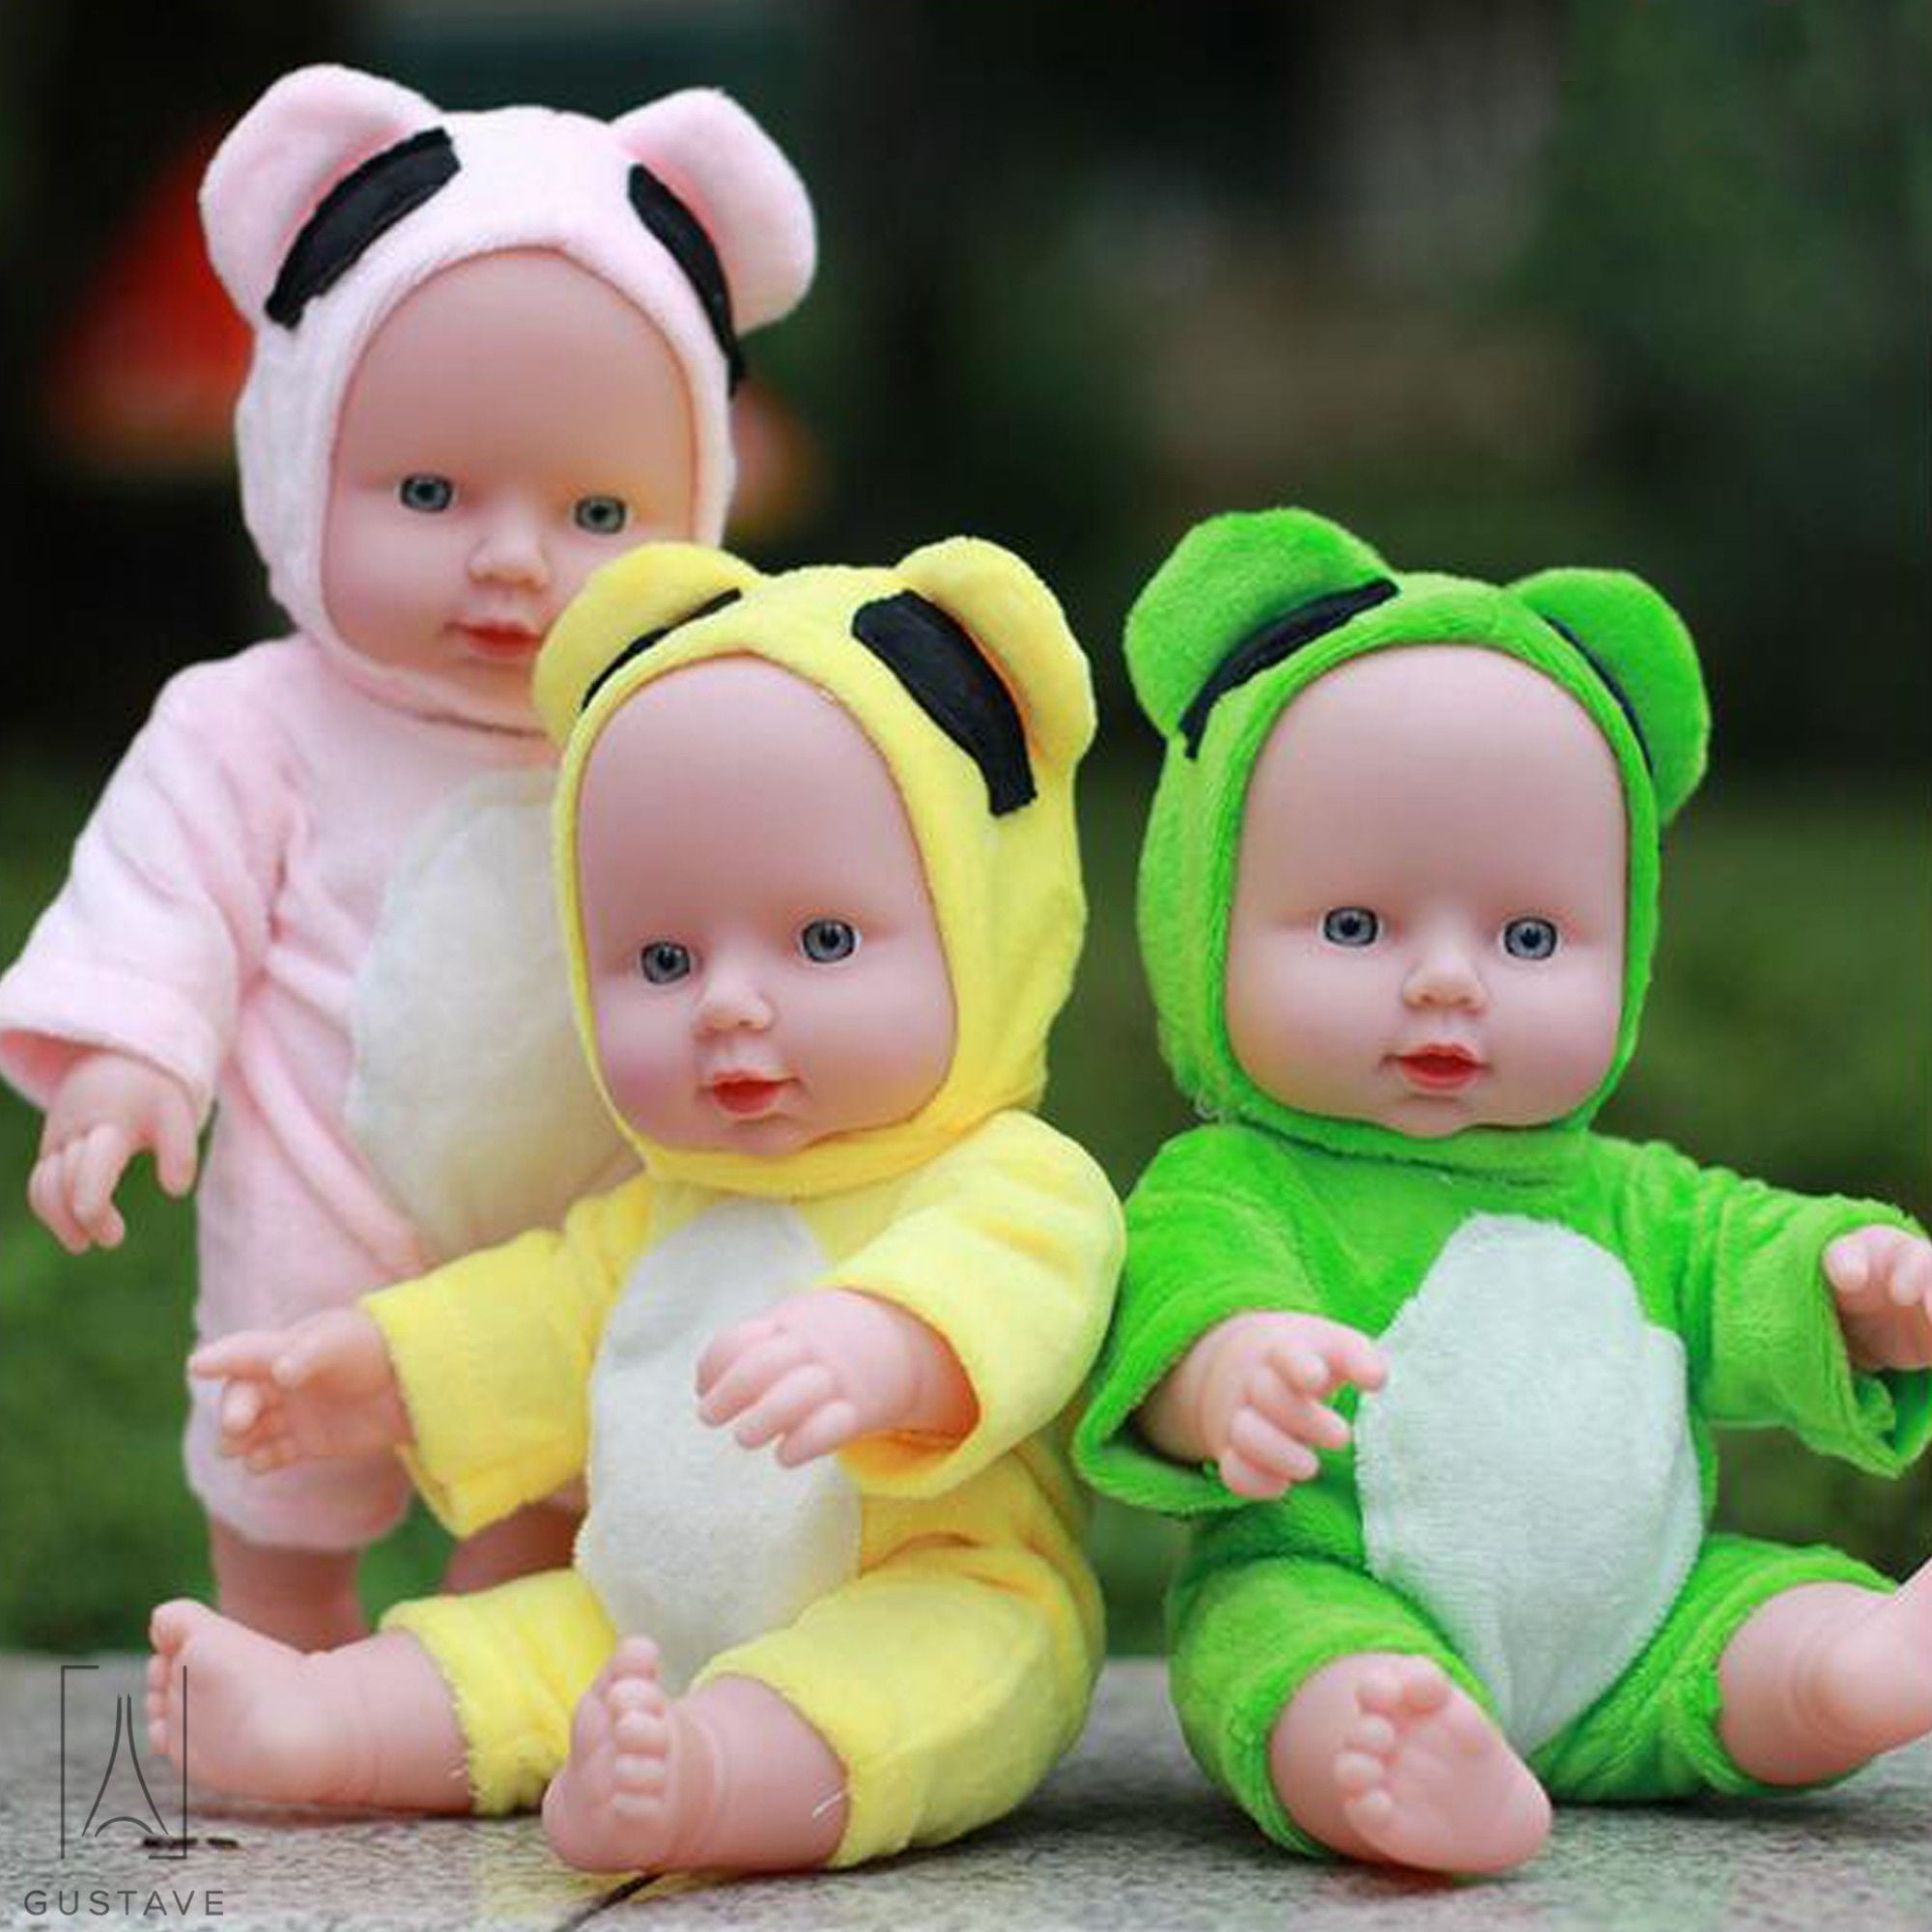 Lifelike Baby Doll Handmade Silicone Vinyl Reborn Newborn Dolls Toy Xmas Gift MU 